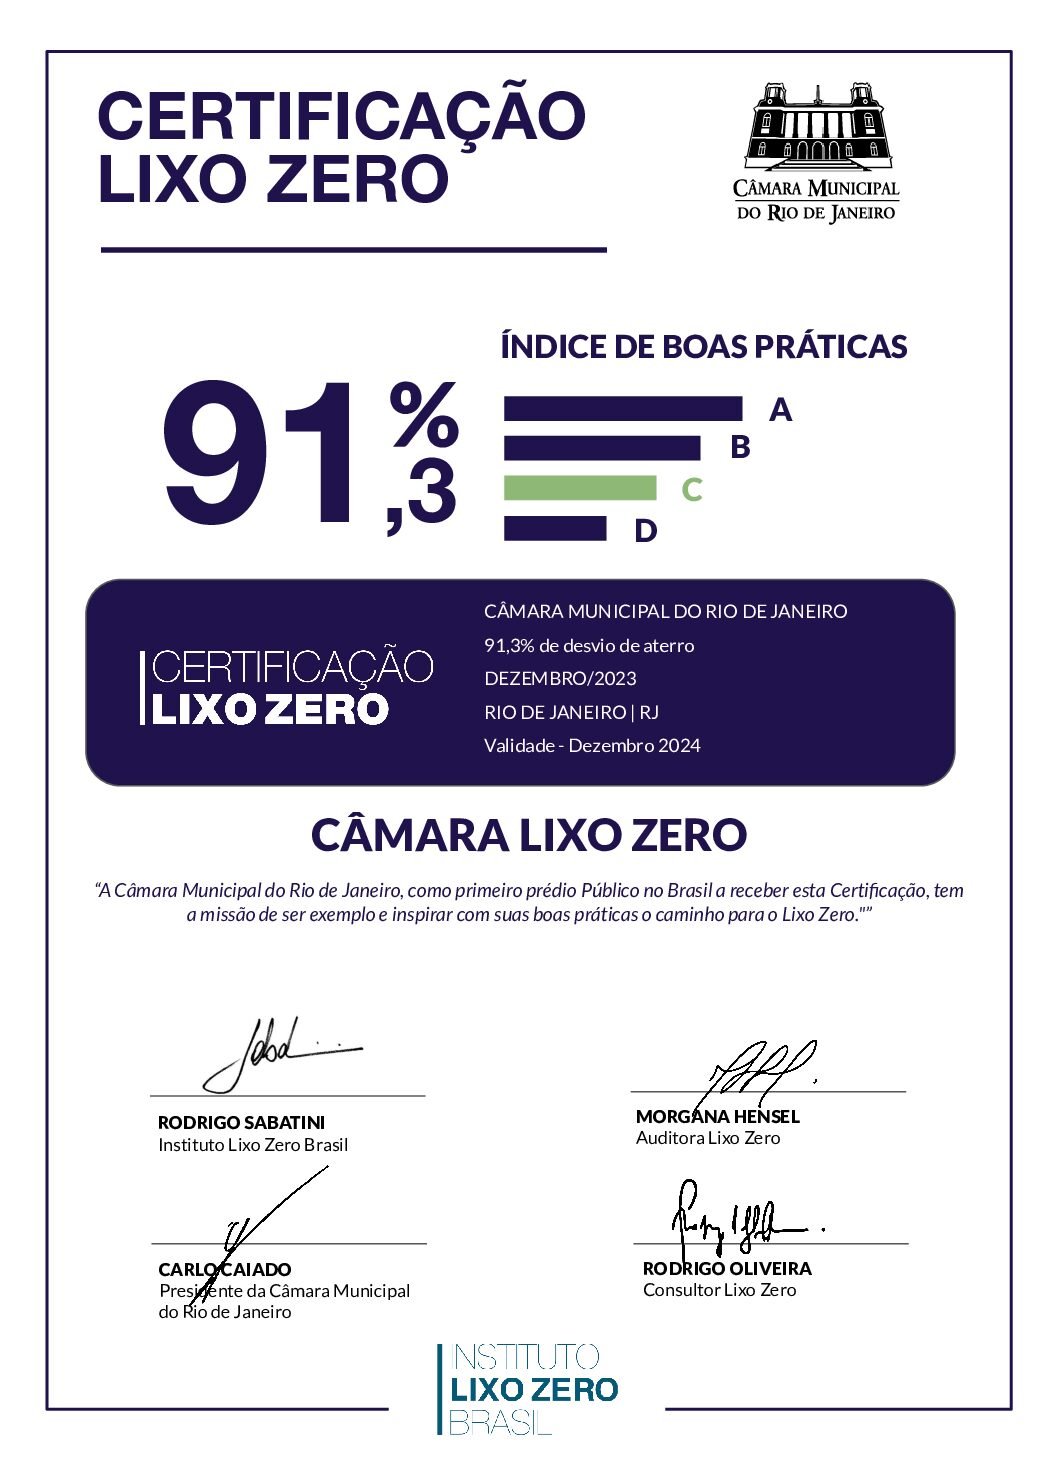 CertificaçãoLixoZero_Camara_Municipal_RJ_Dezembro_2023 (1)